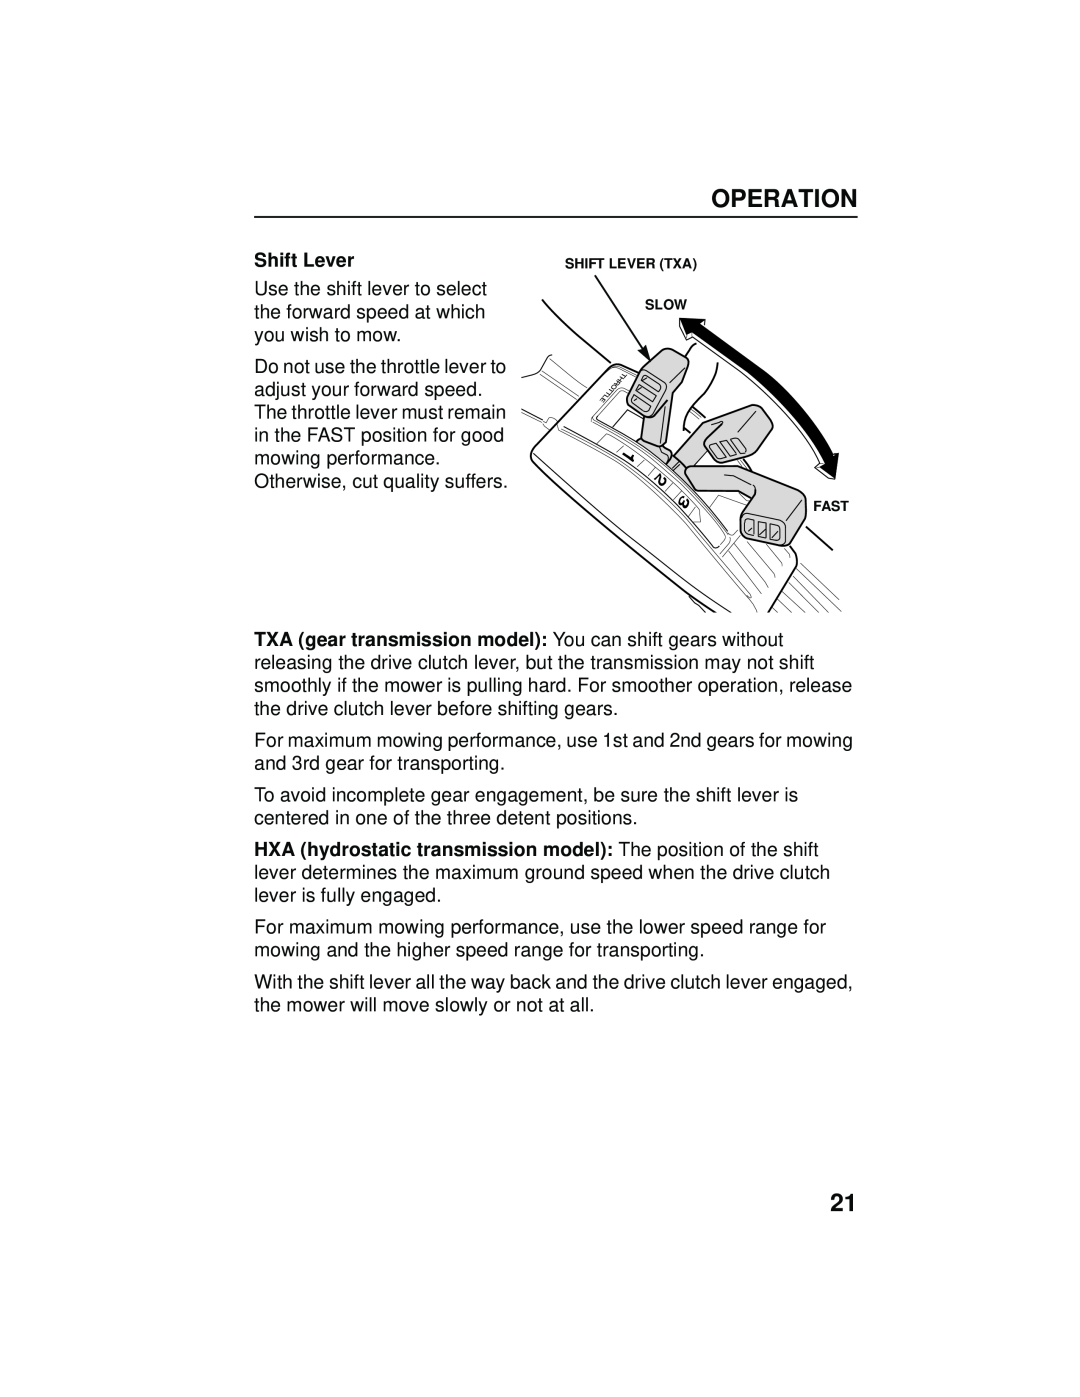 Honda Power Equipment HRB216TXA owner manual Operation, Shift Lever Txa Slow Fast 